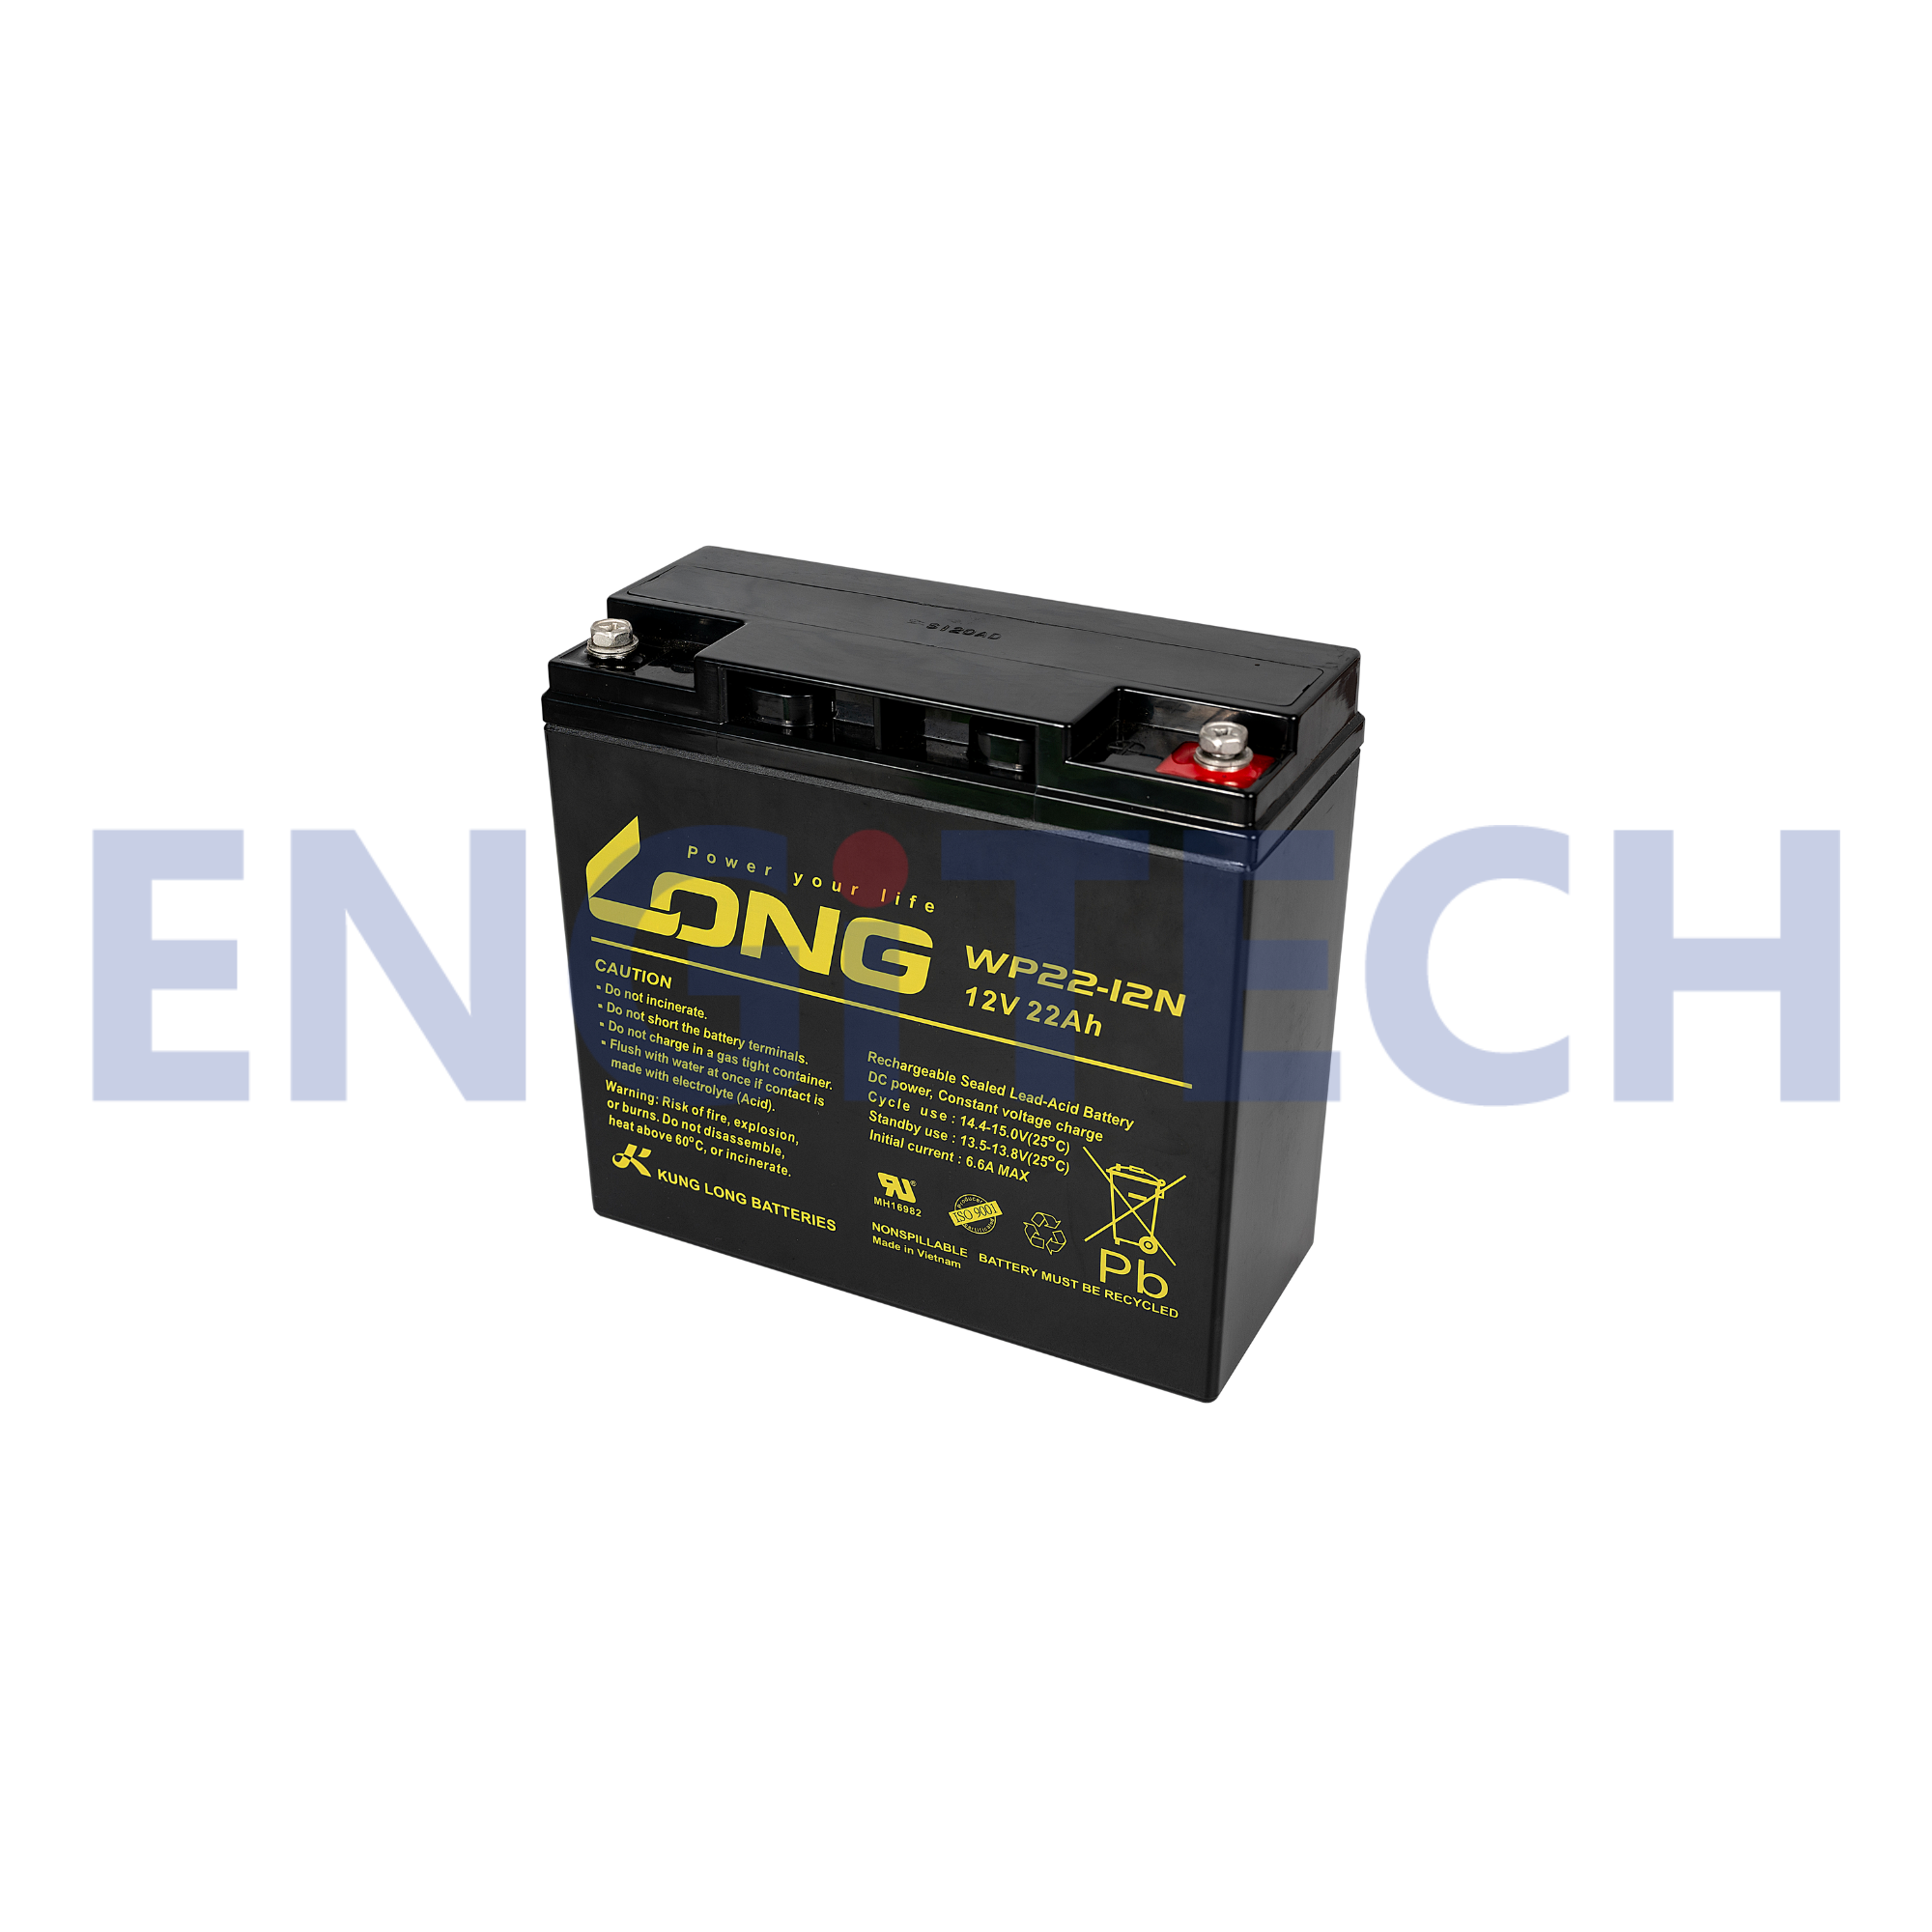 Long VRLA Battery ลอง แบตเตอรี่ แบตแห้ง WP22-12N